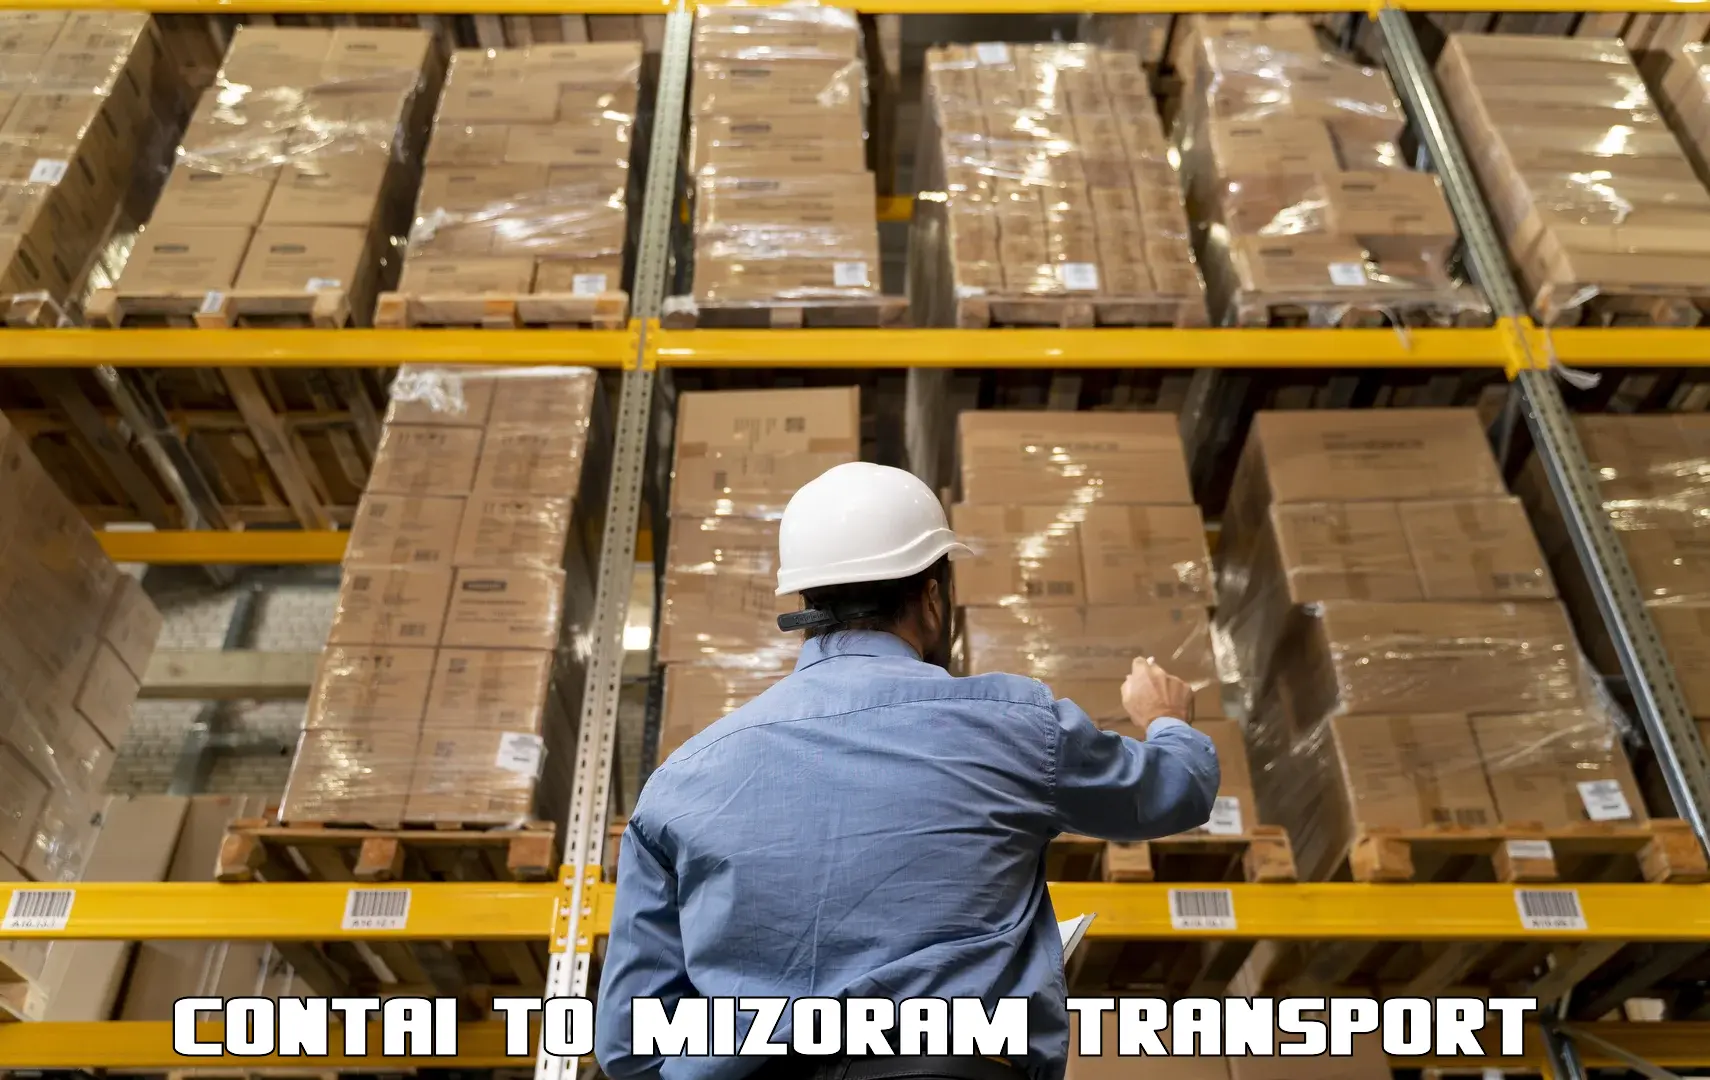 Pick up transport service Contai to Mizoram